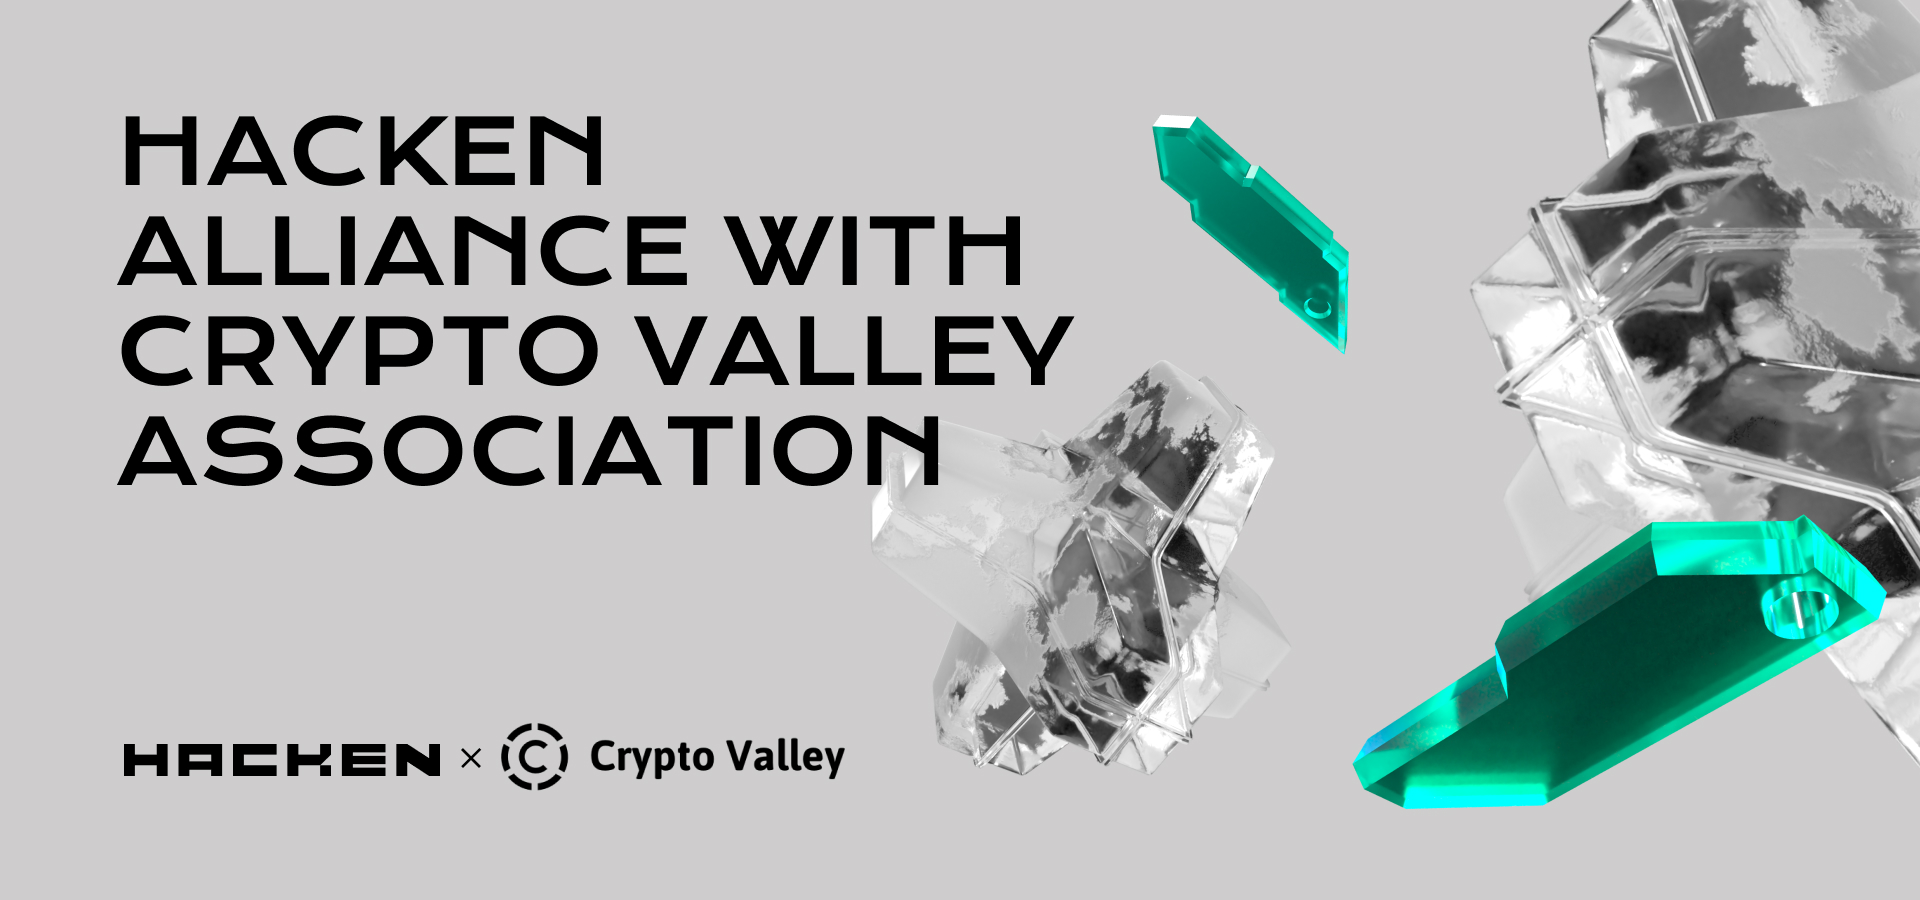 Hacken joins Crypto Valley Association